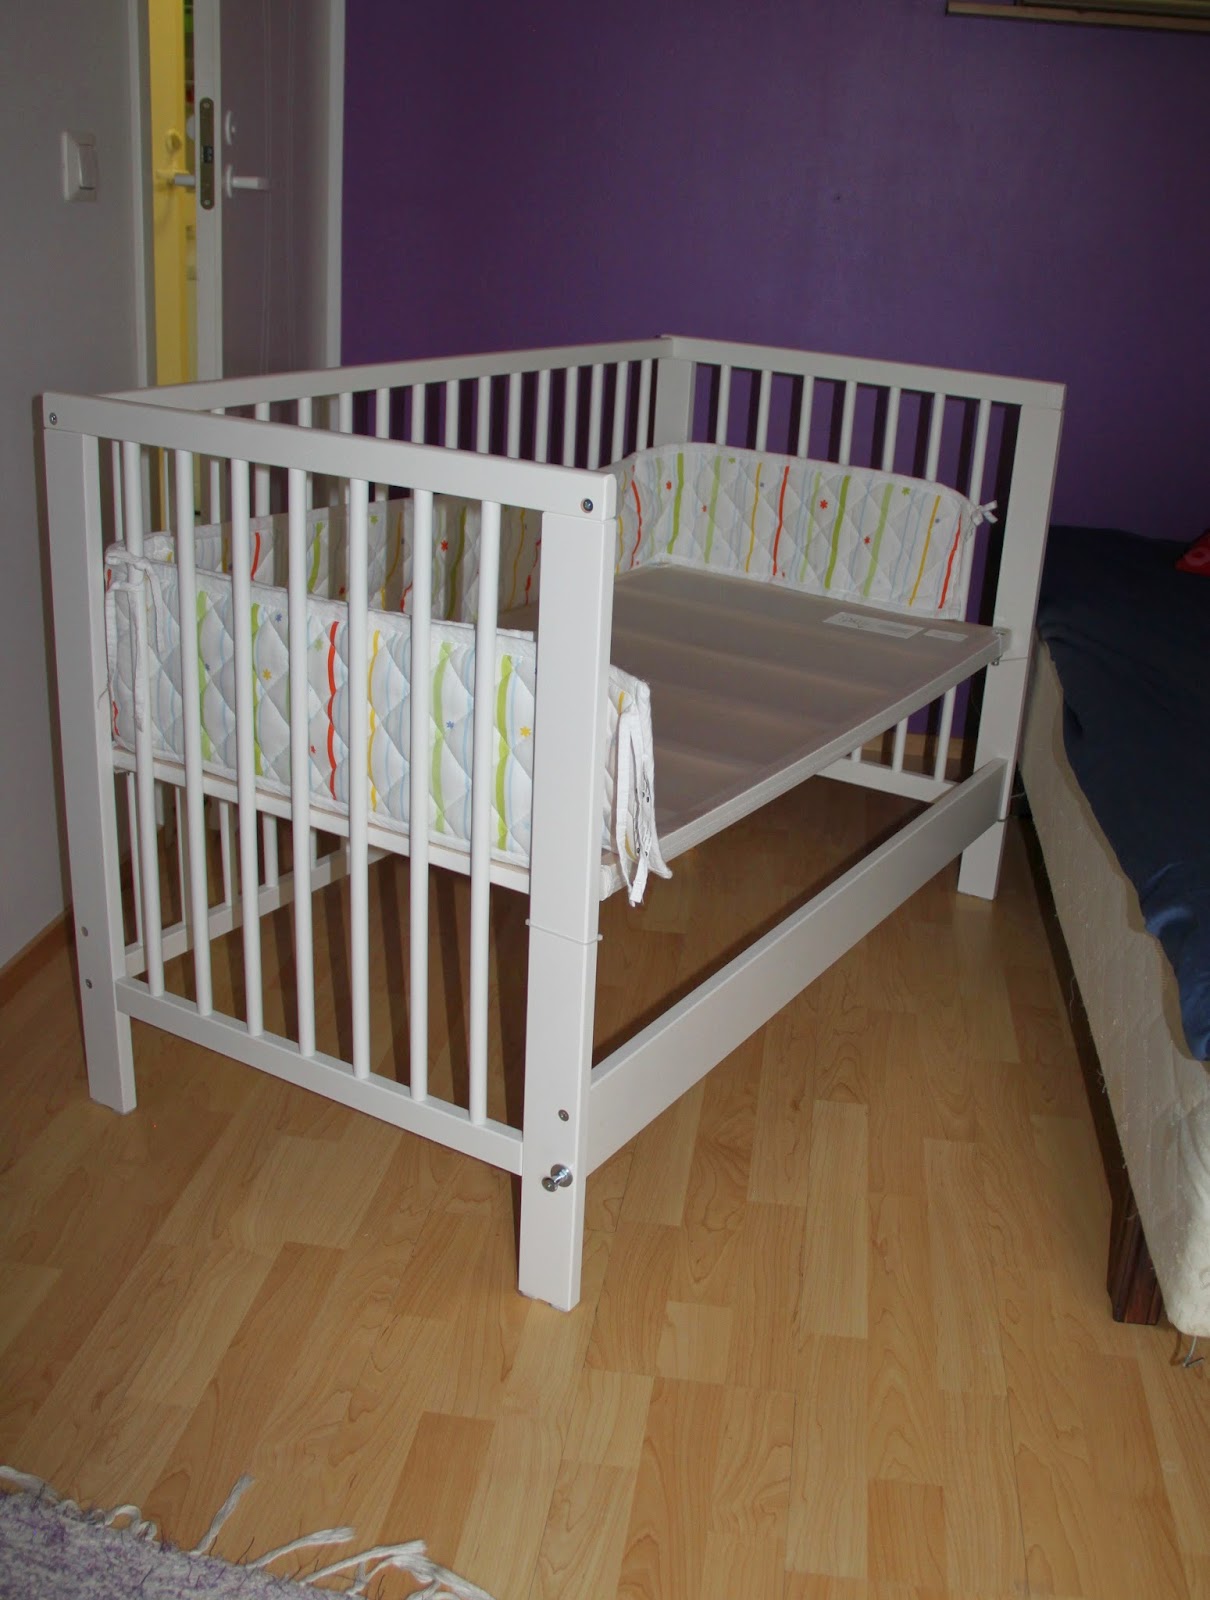 Decoratie Weg uitspraak Petriojk stuff: Ikea hack - Gulliver baby crib meets an engineer